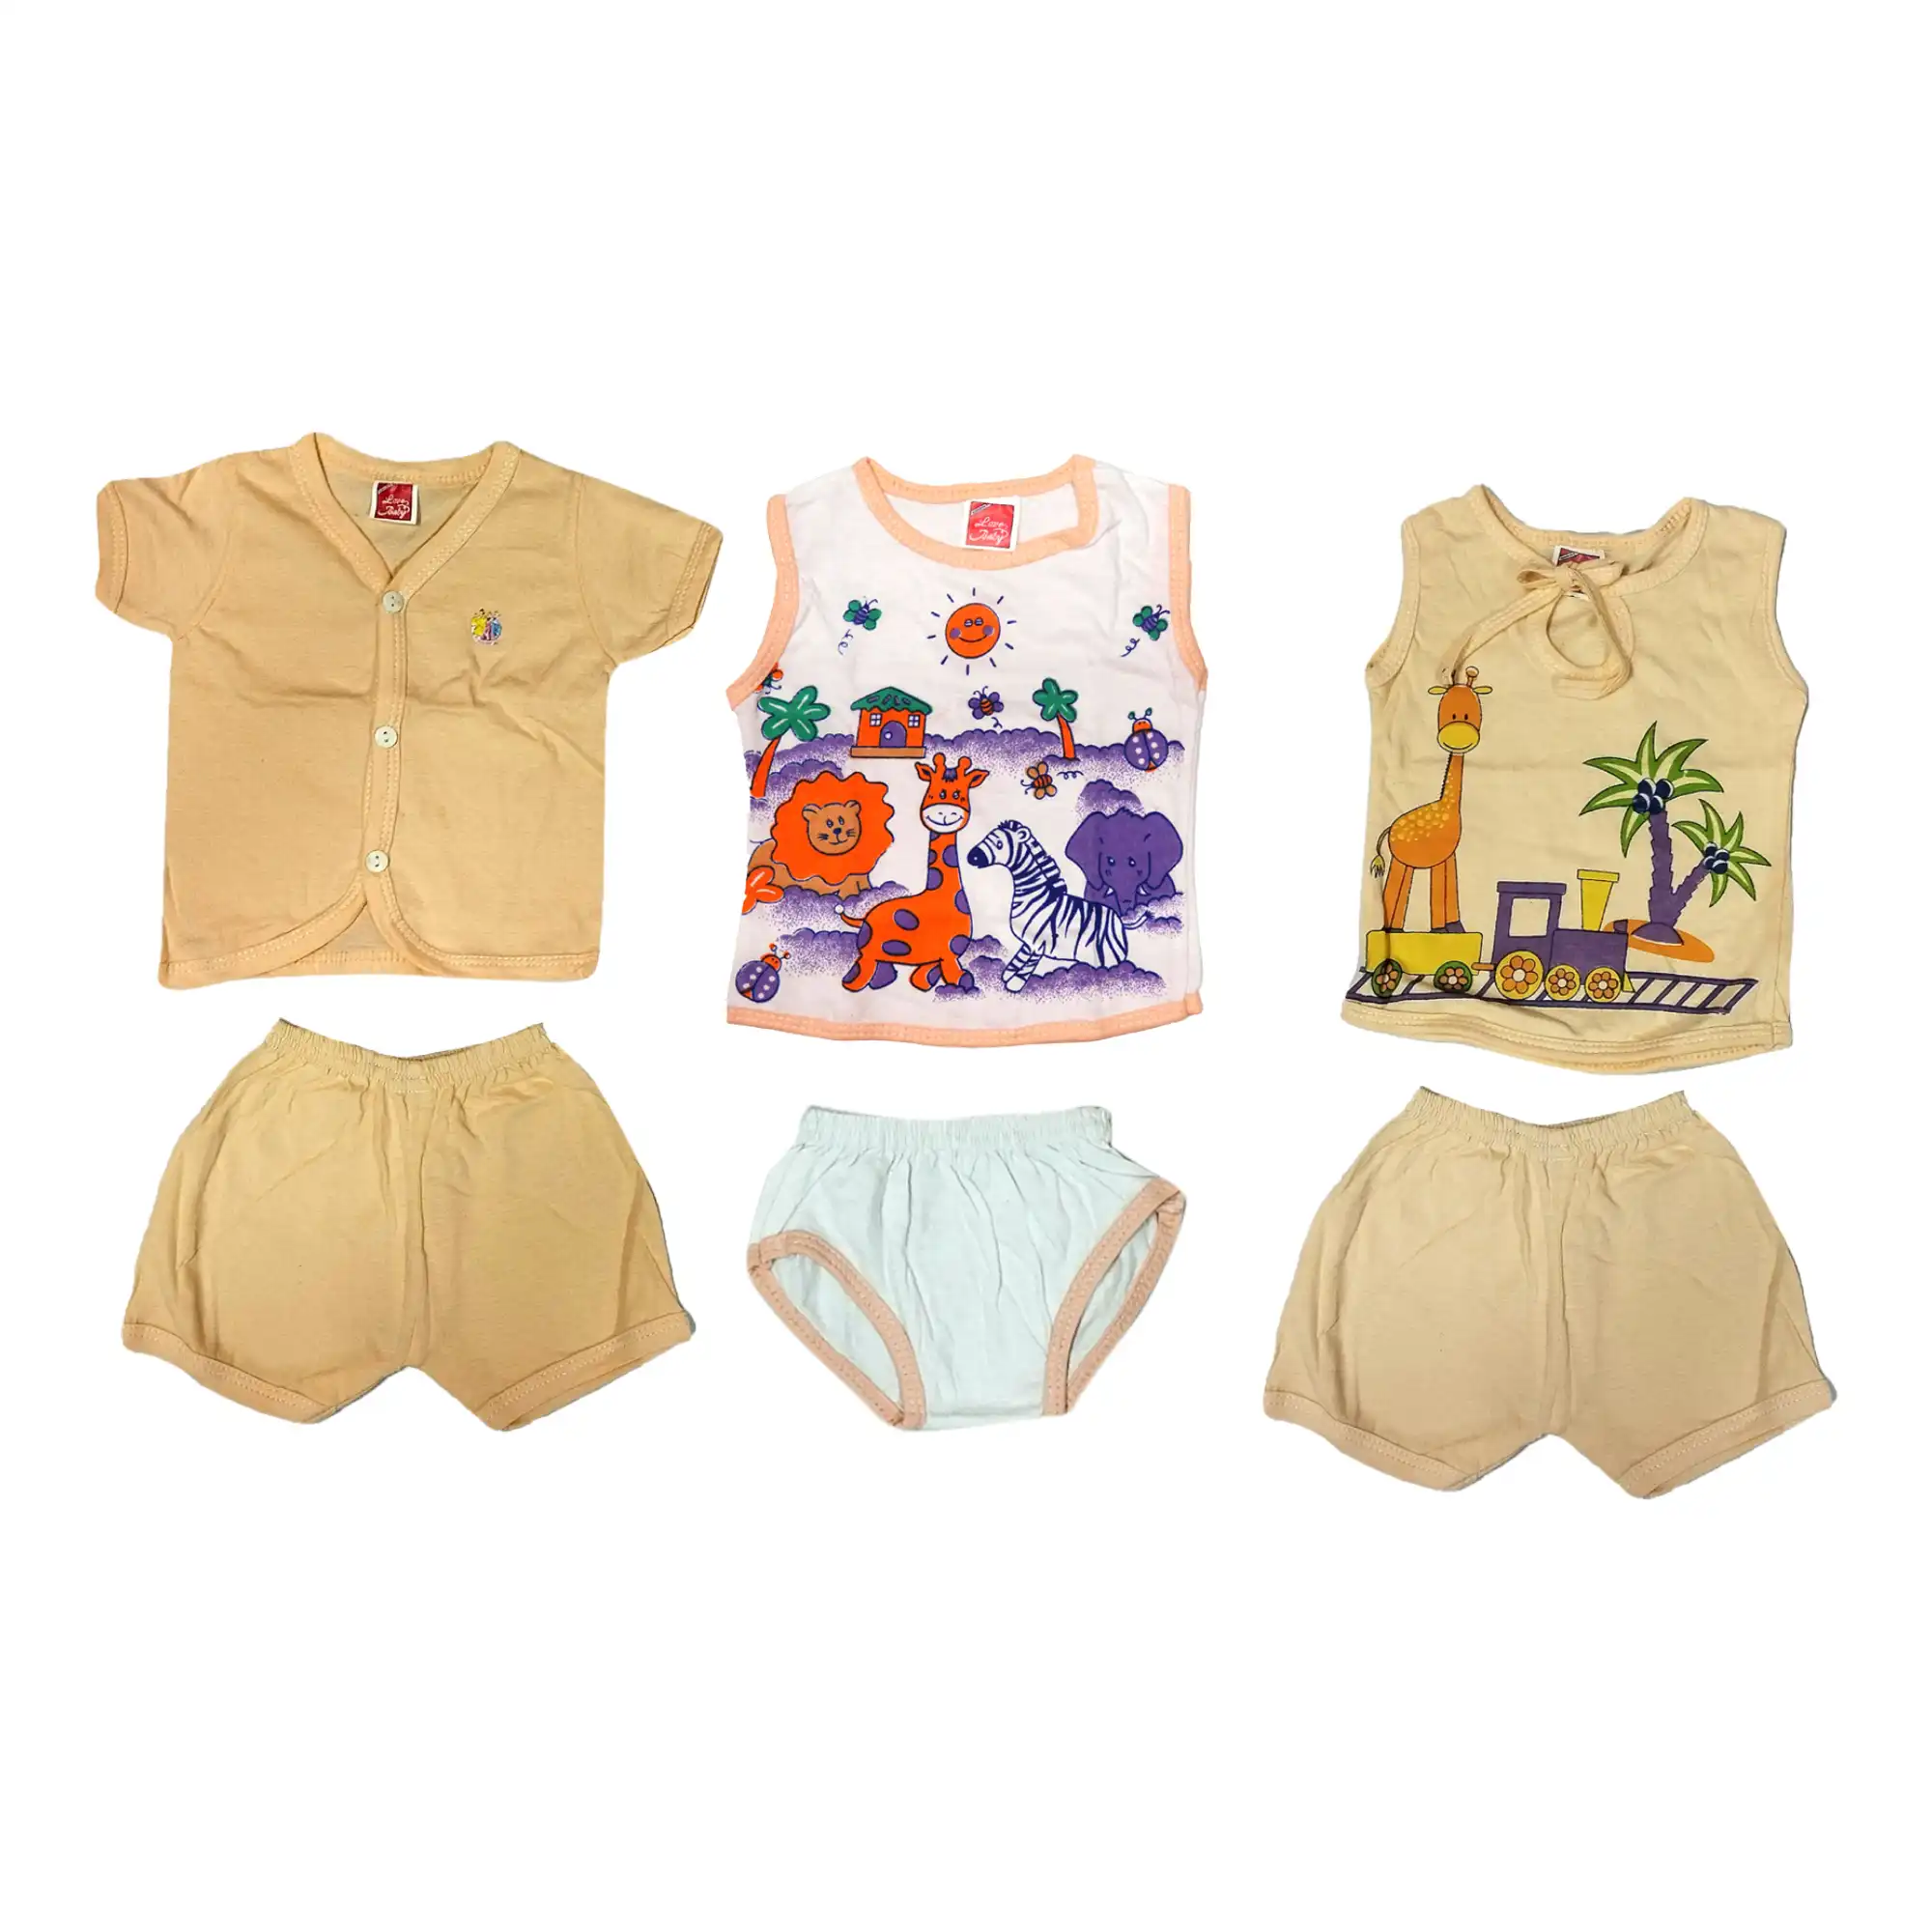 Newborn Baby Clothing Set of 3 Peach 3